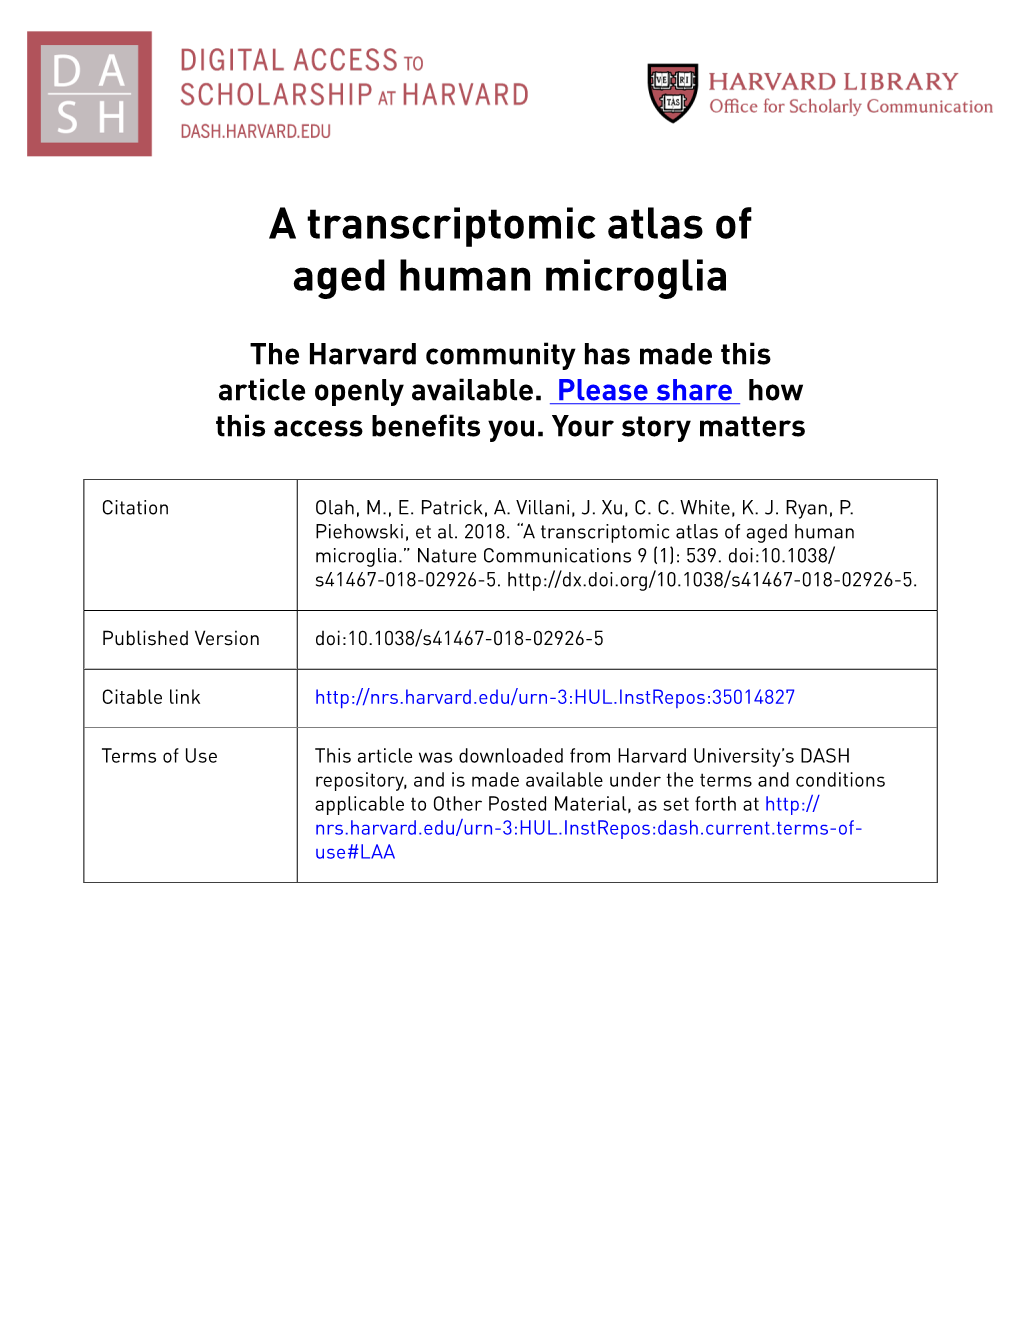 A Transcriptomic Atlas of Aged Human Microglia